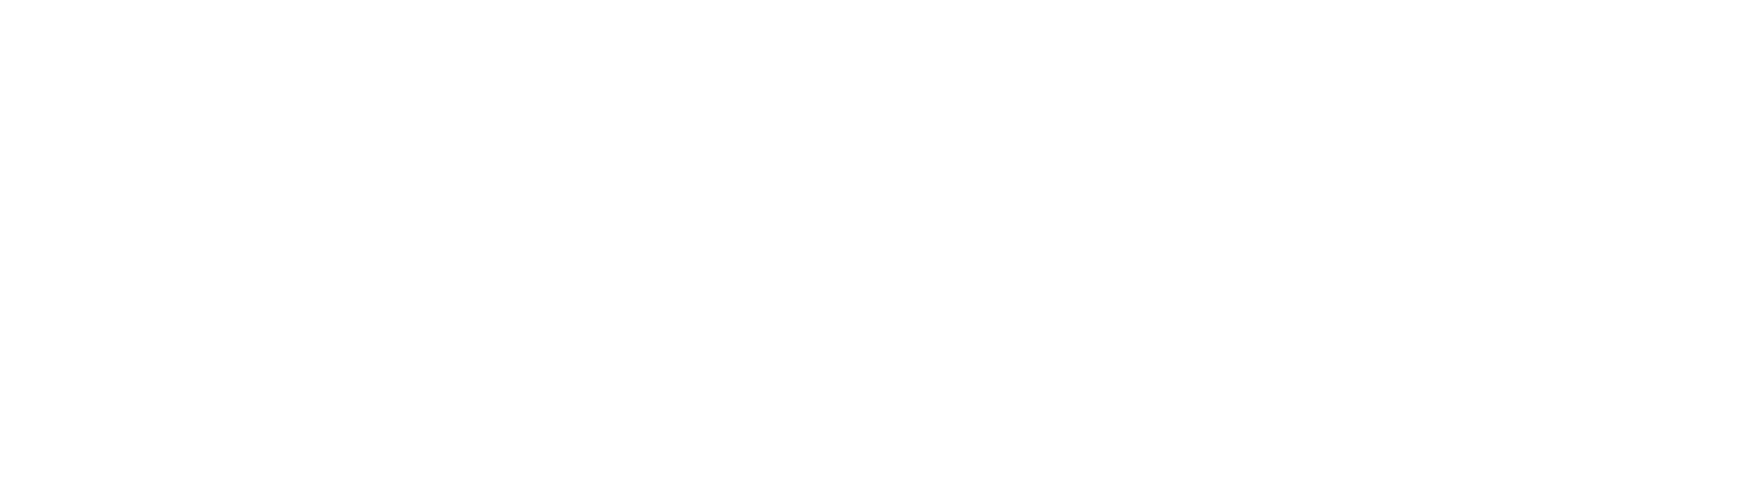 bravura-horizontal-logo